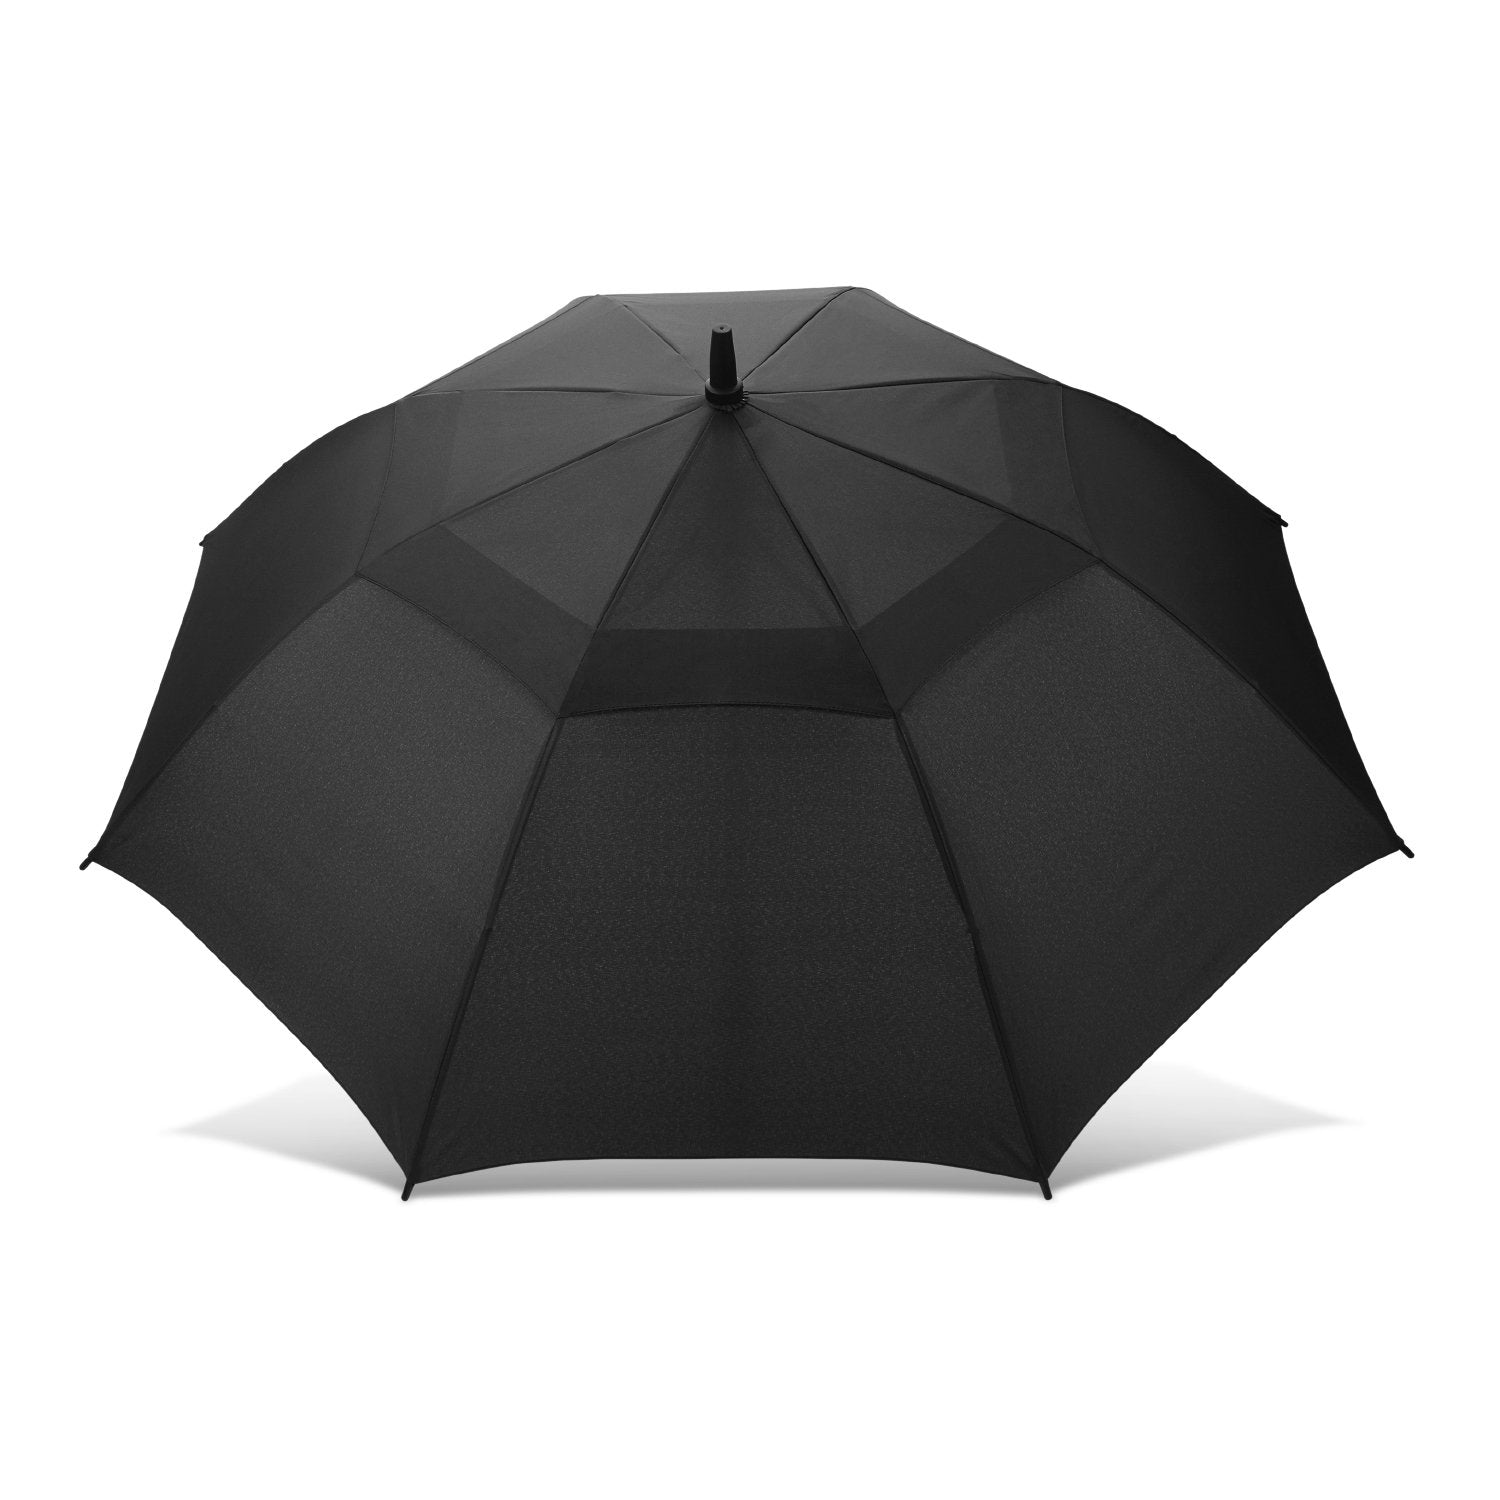 SWISS-PEAK®️-tornado-heavy-duty-storm-proof-canopy-wind-proof-umbrella-windproof-fibreglass-auto-open-black-3